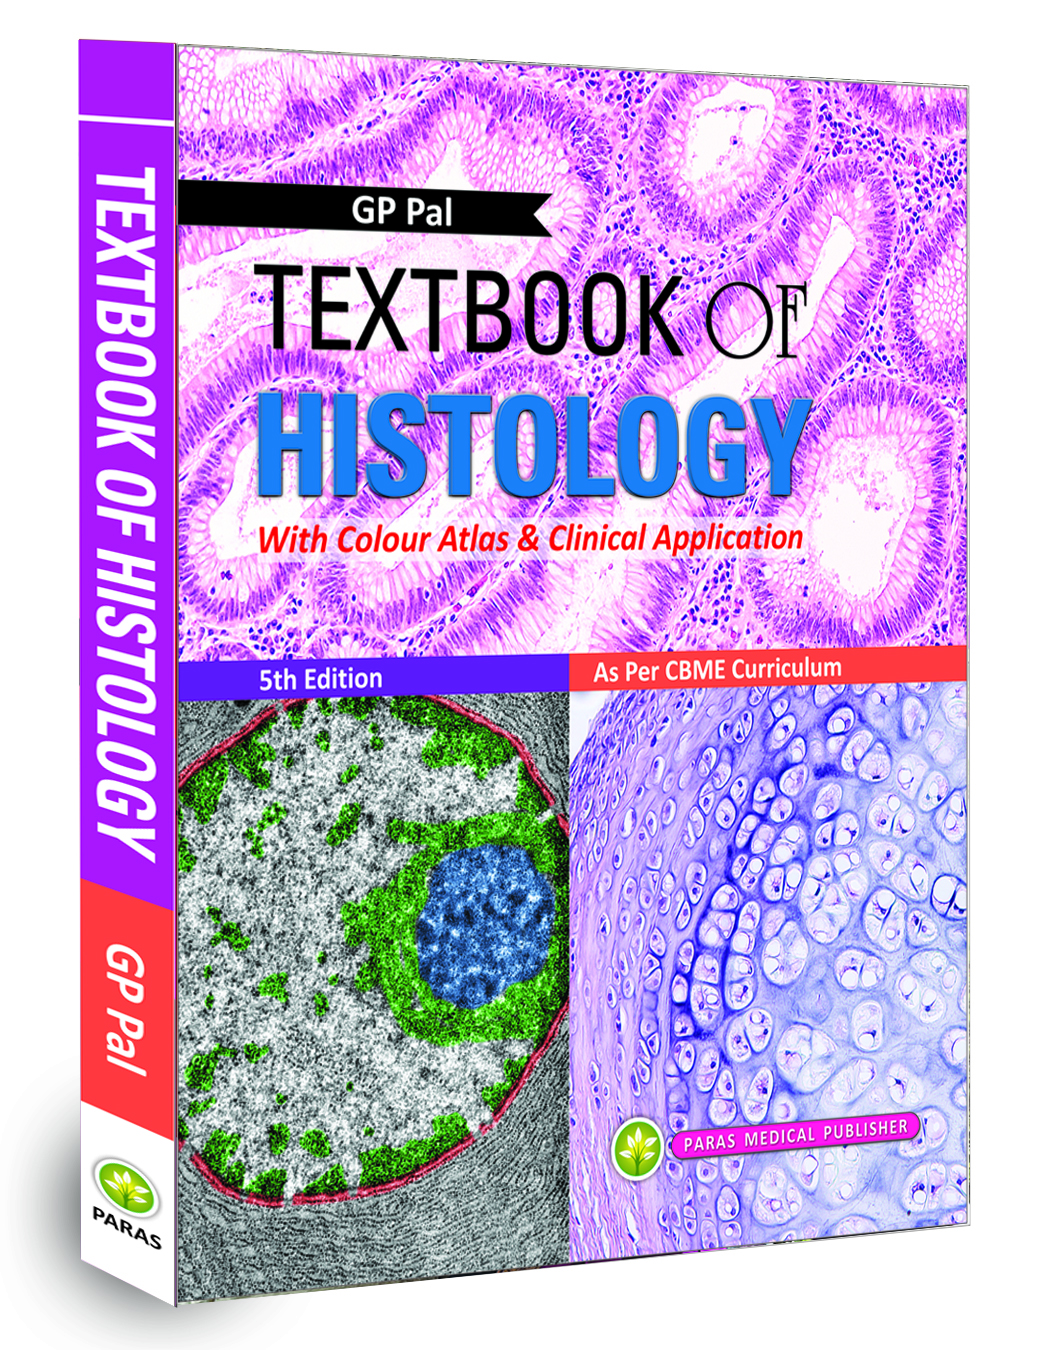 Pal Histology